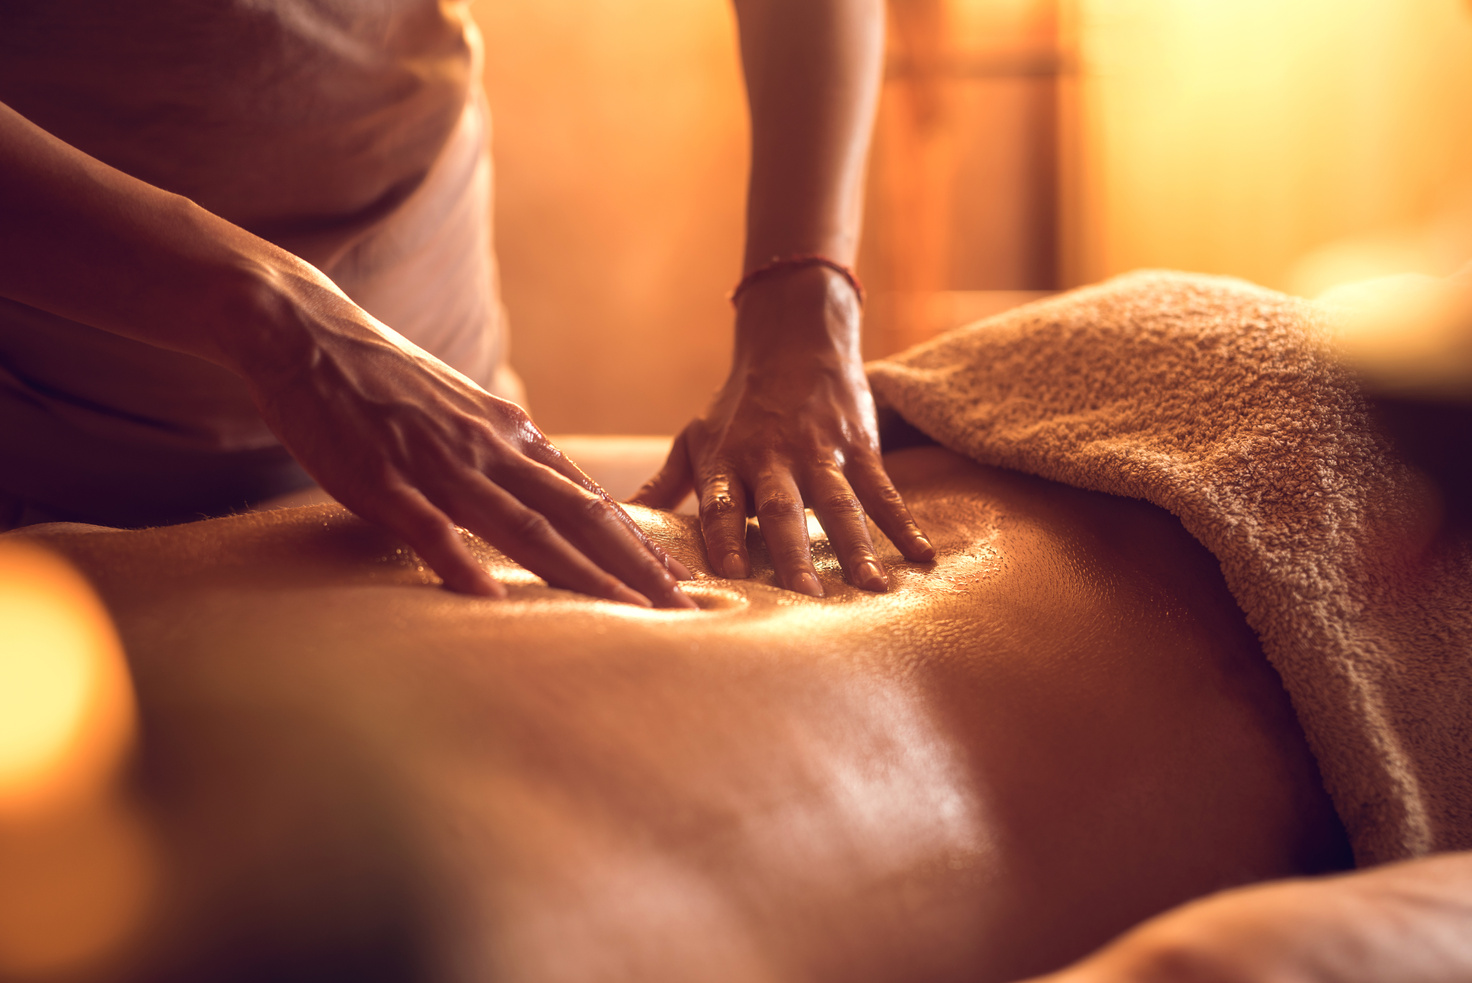 Unrecognizable massage therapist massaging man's back.